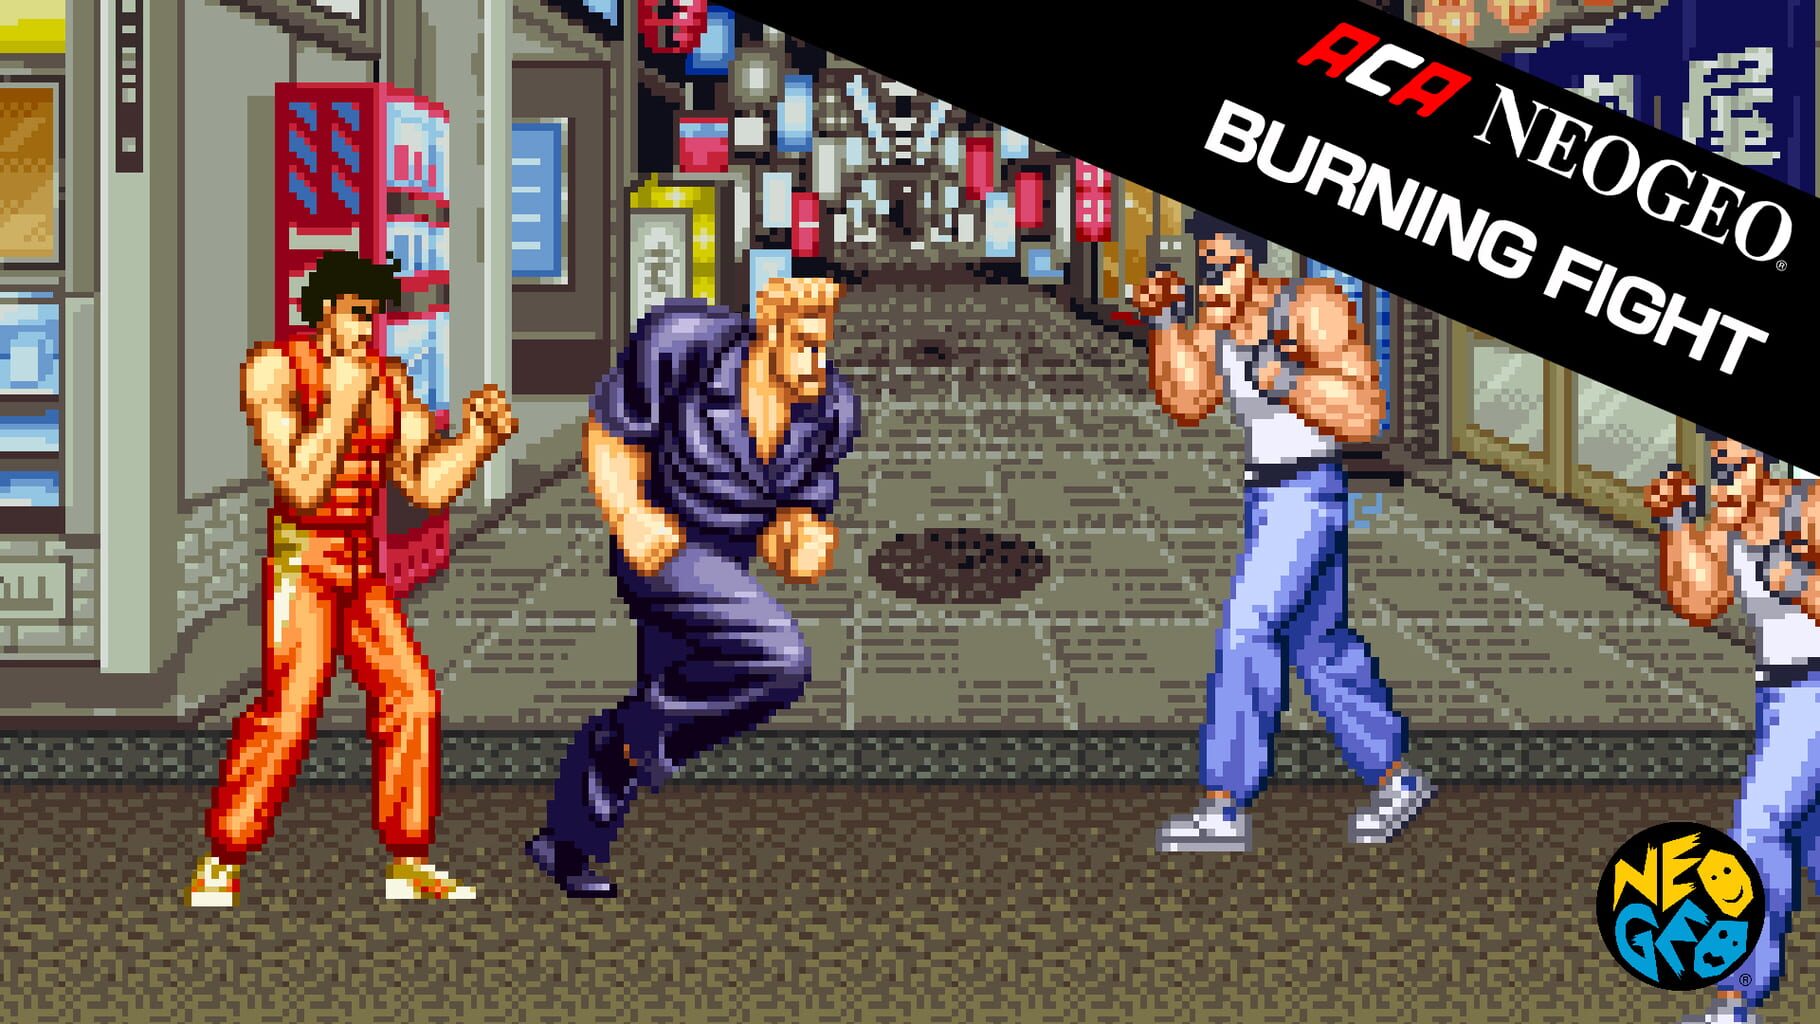 ACA Neo Geo: Burning Fight artwork